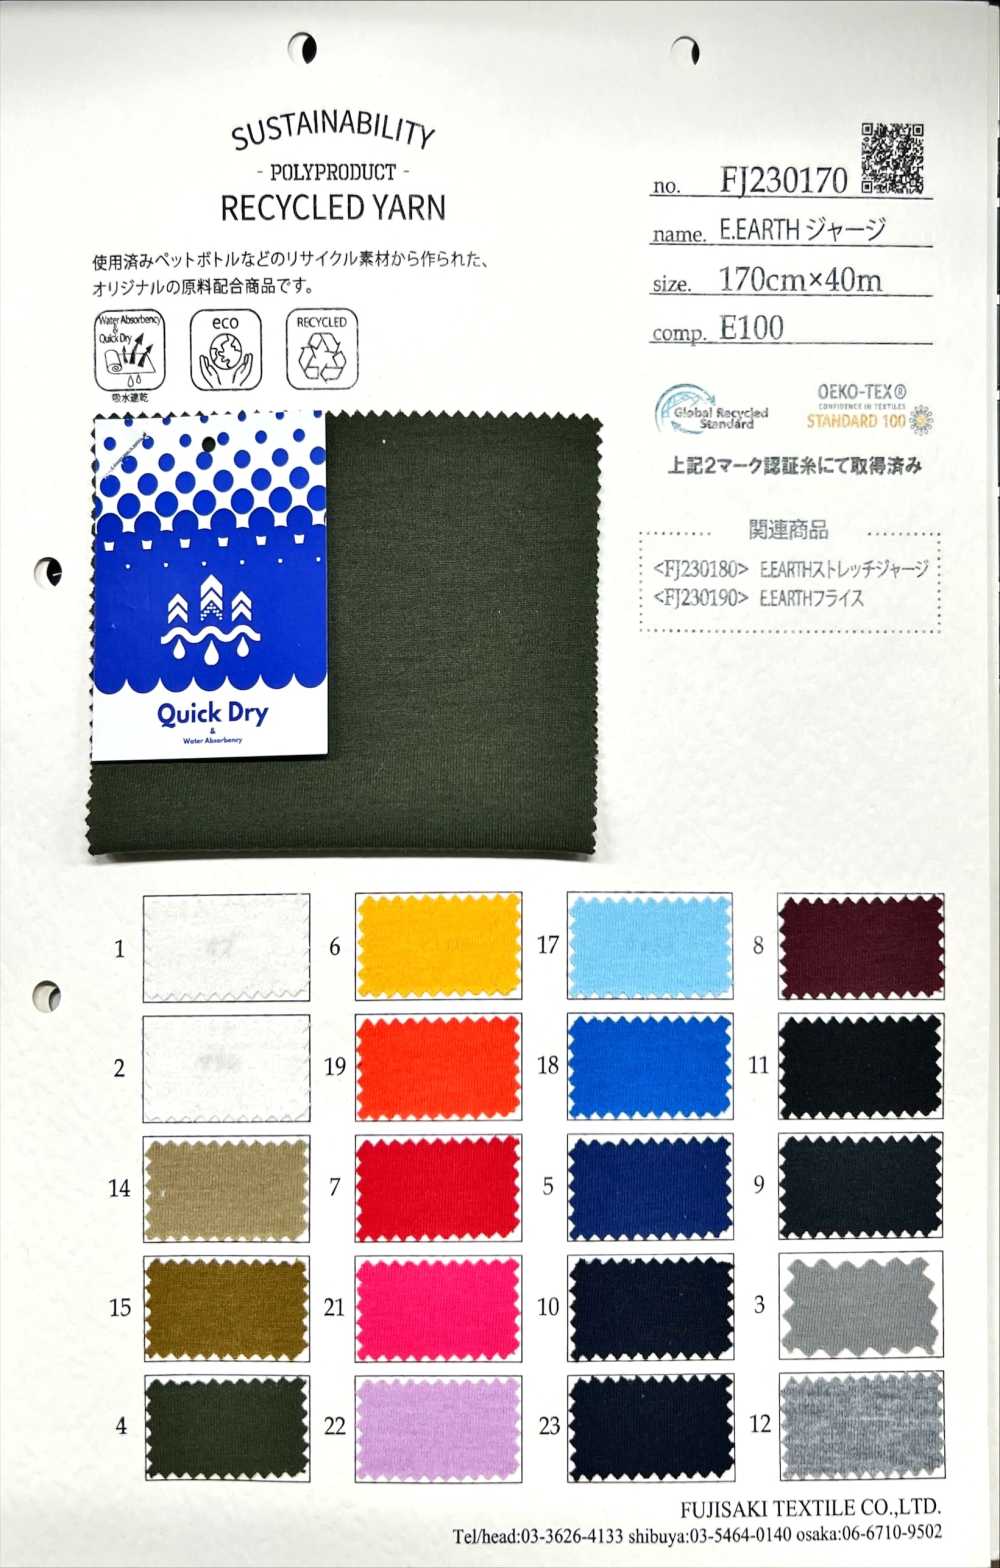 FJ230170 Maillot E.EARTH[Fabrication De Textile] Fujisaki Textile